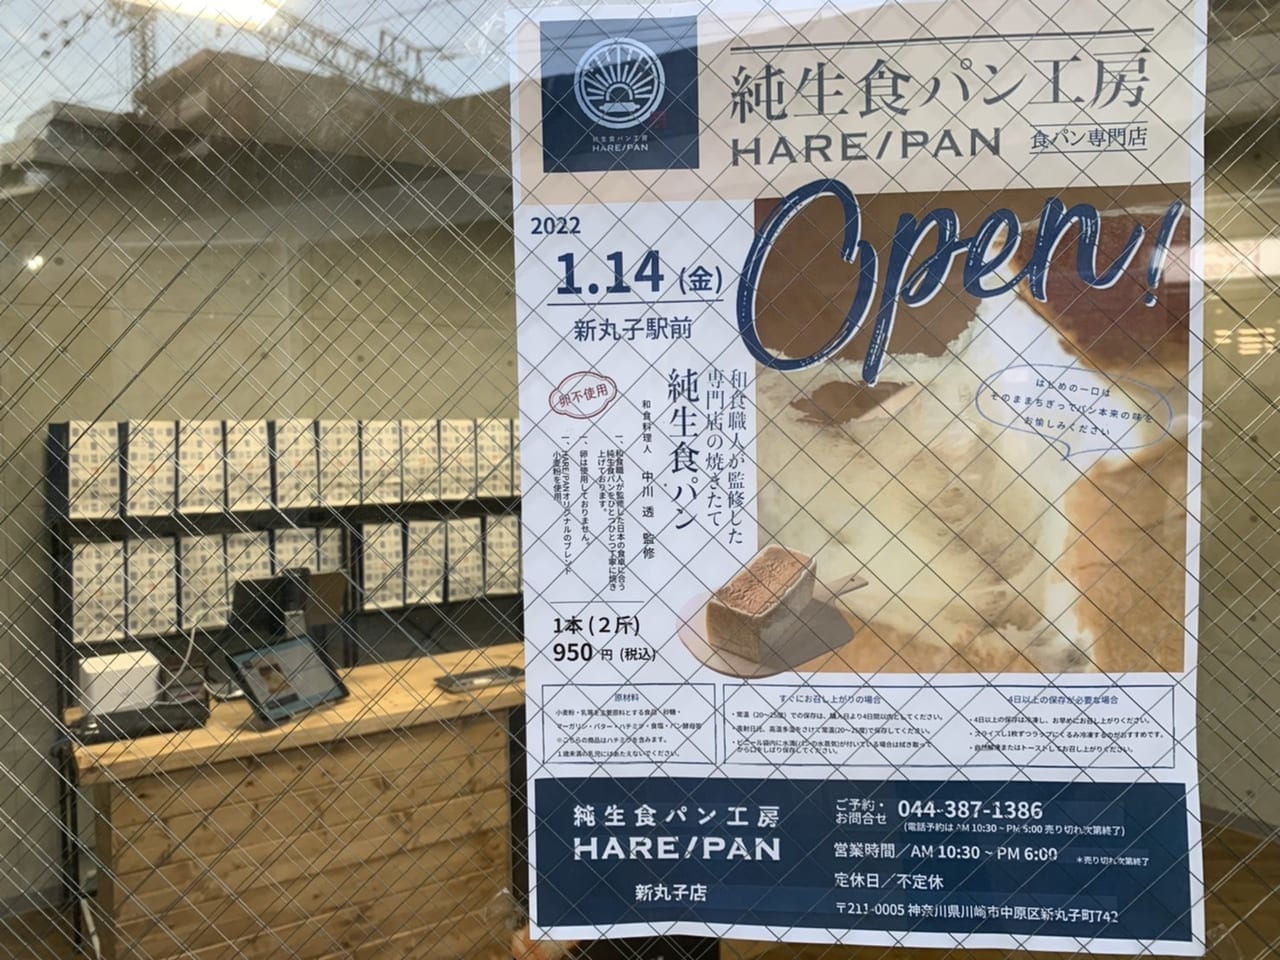 HARE/PAN